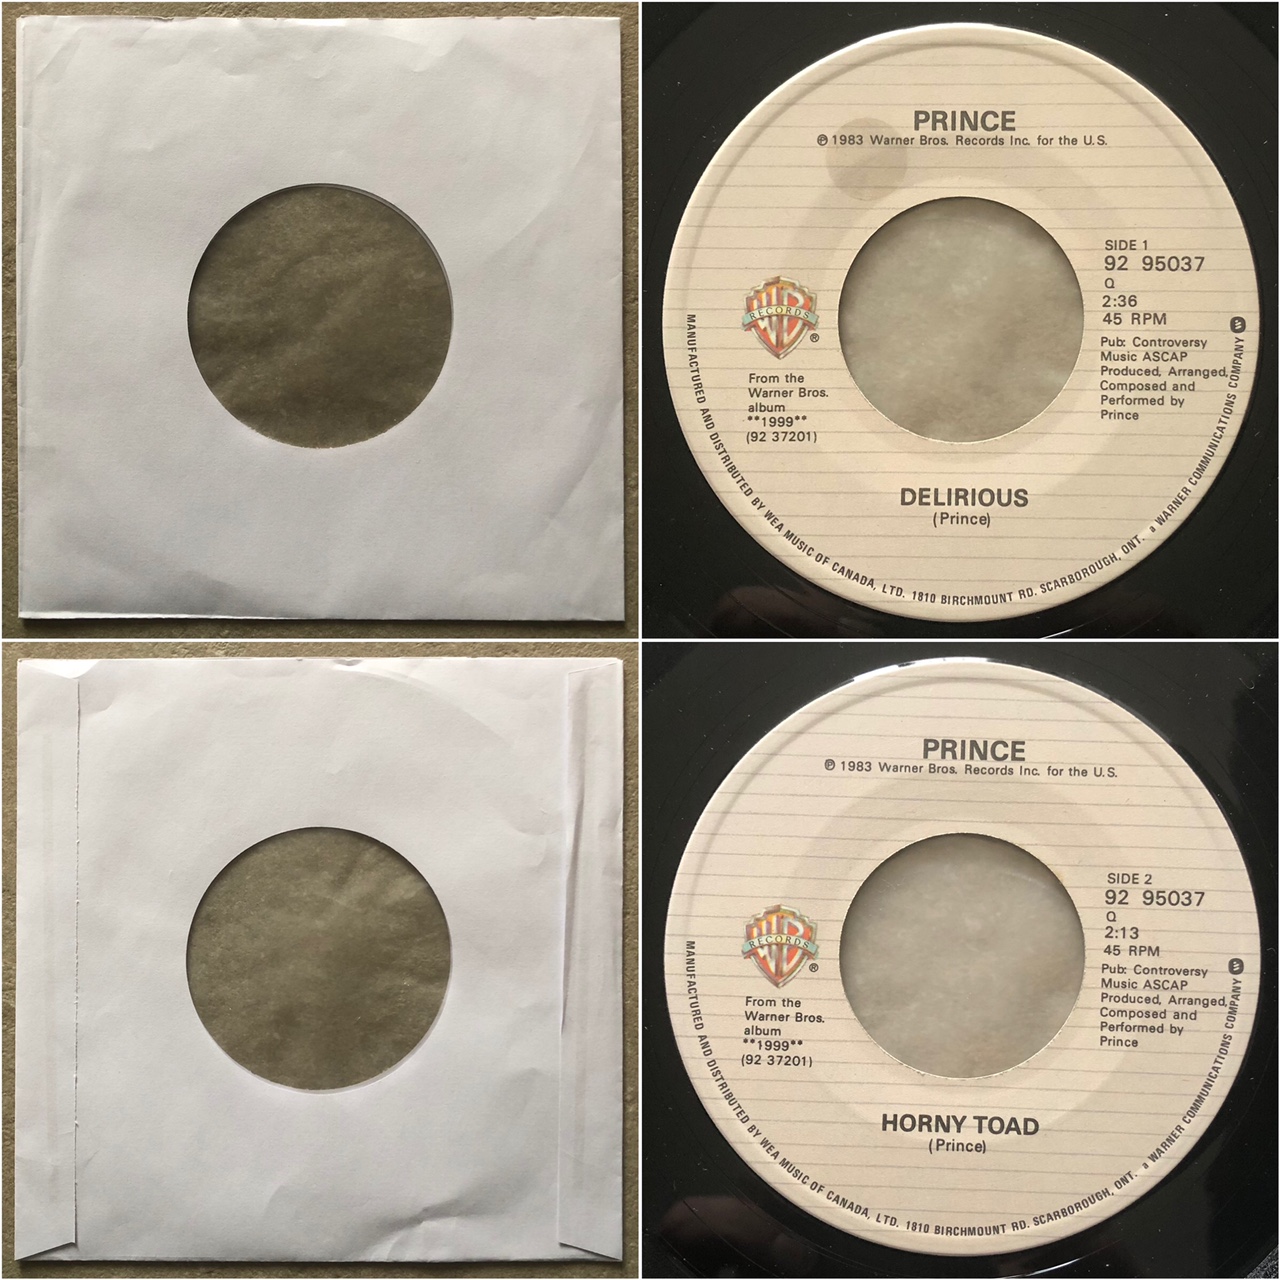 Jukebox Title Strips CD 7" 45RPM Records b 2 Prince Little Red Corvette 